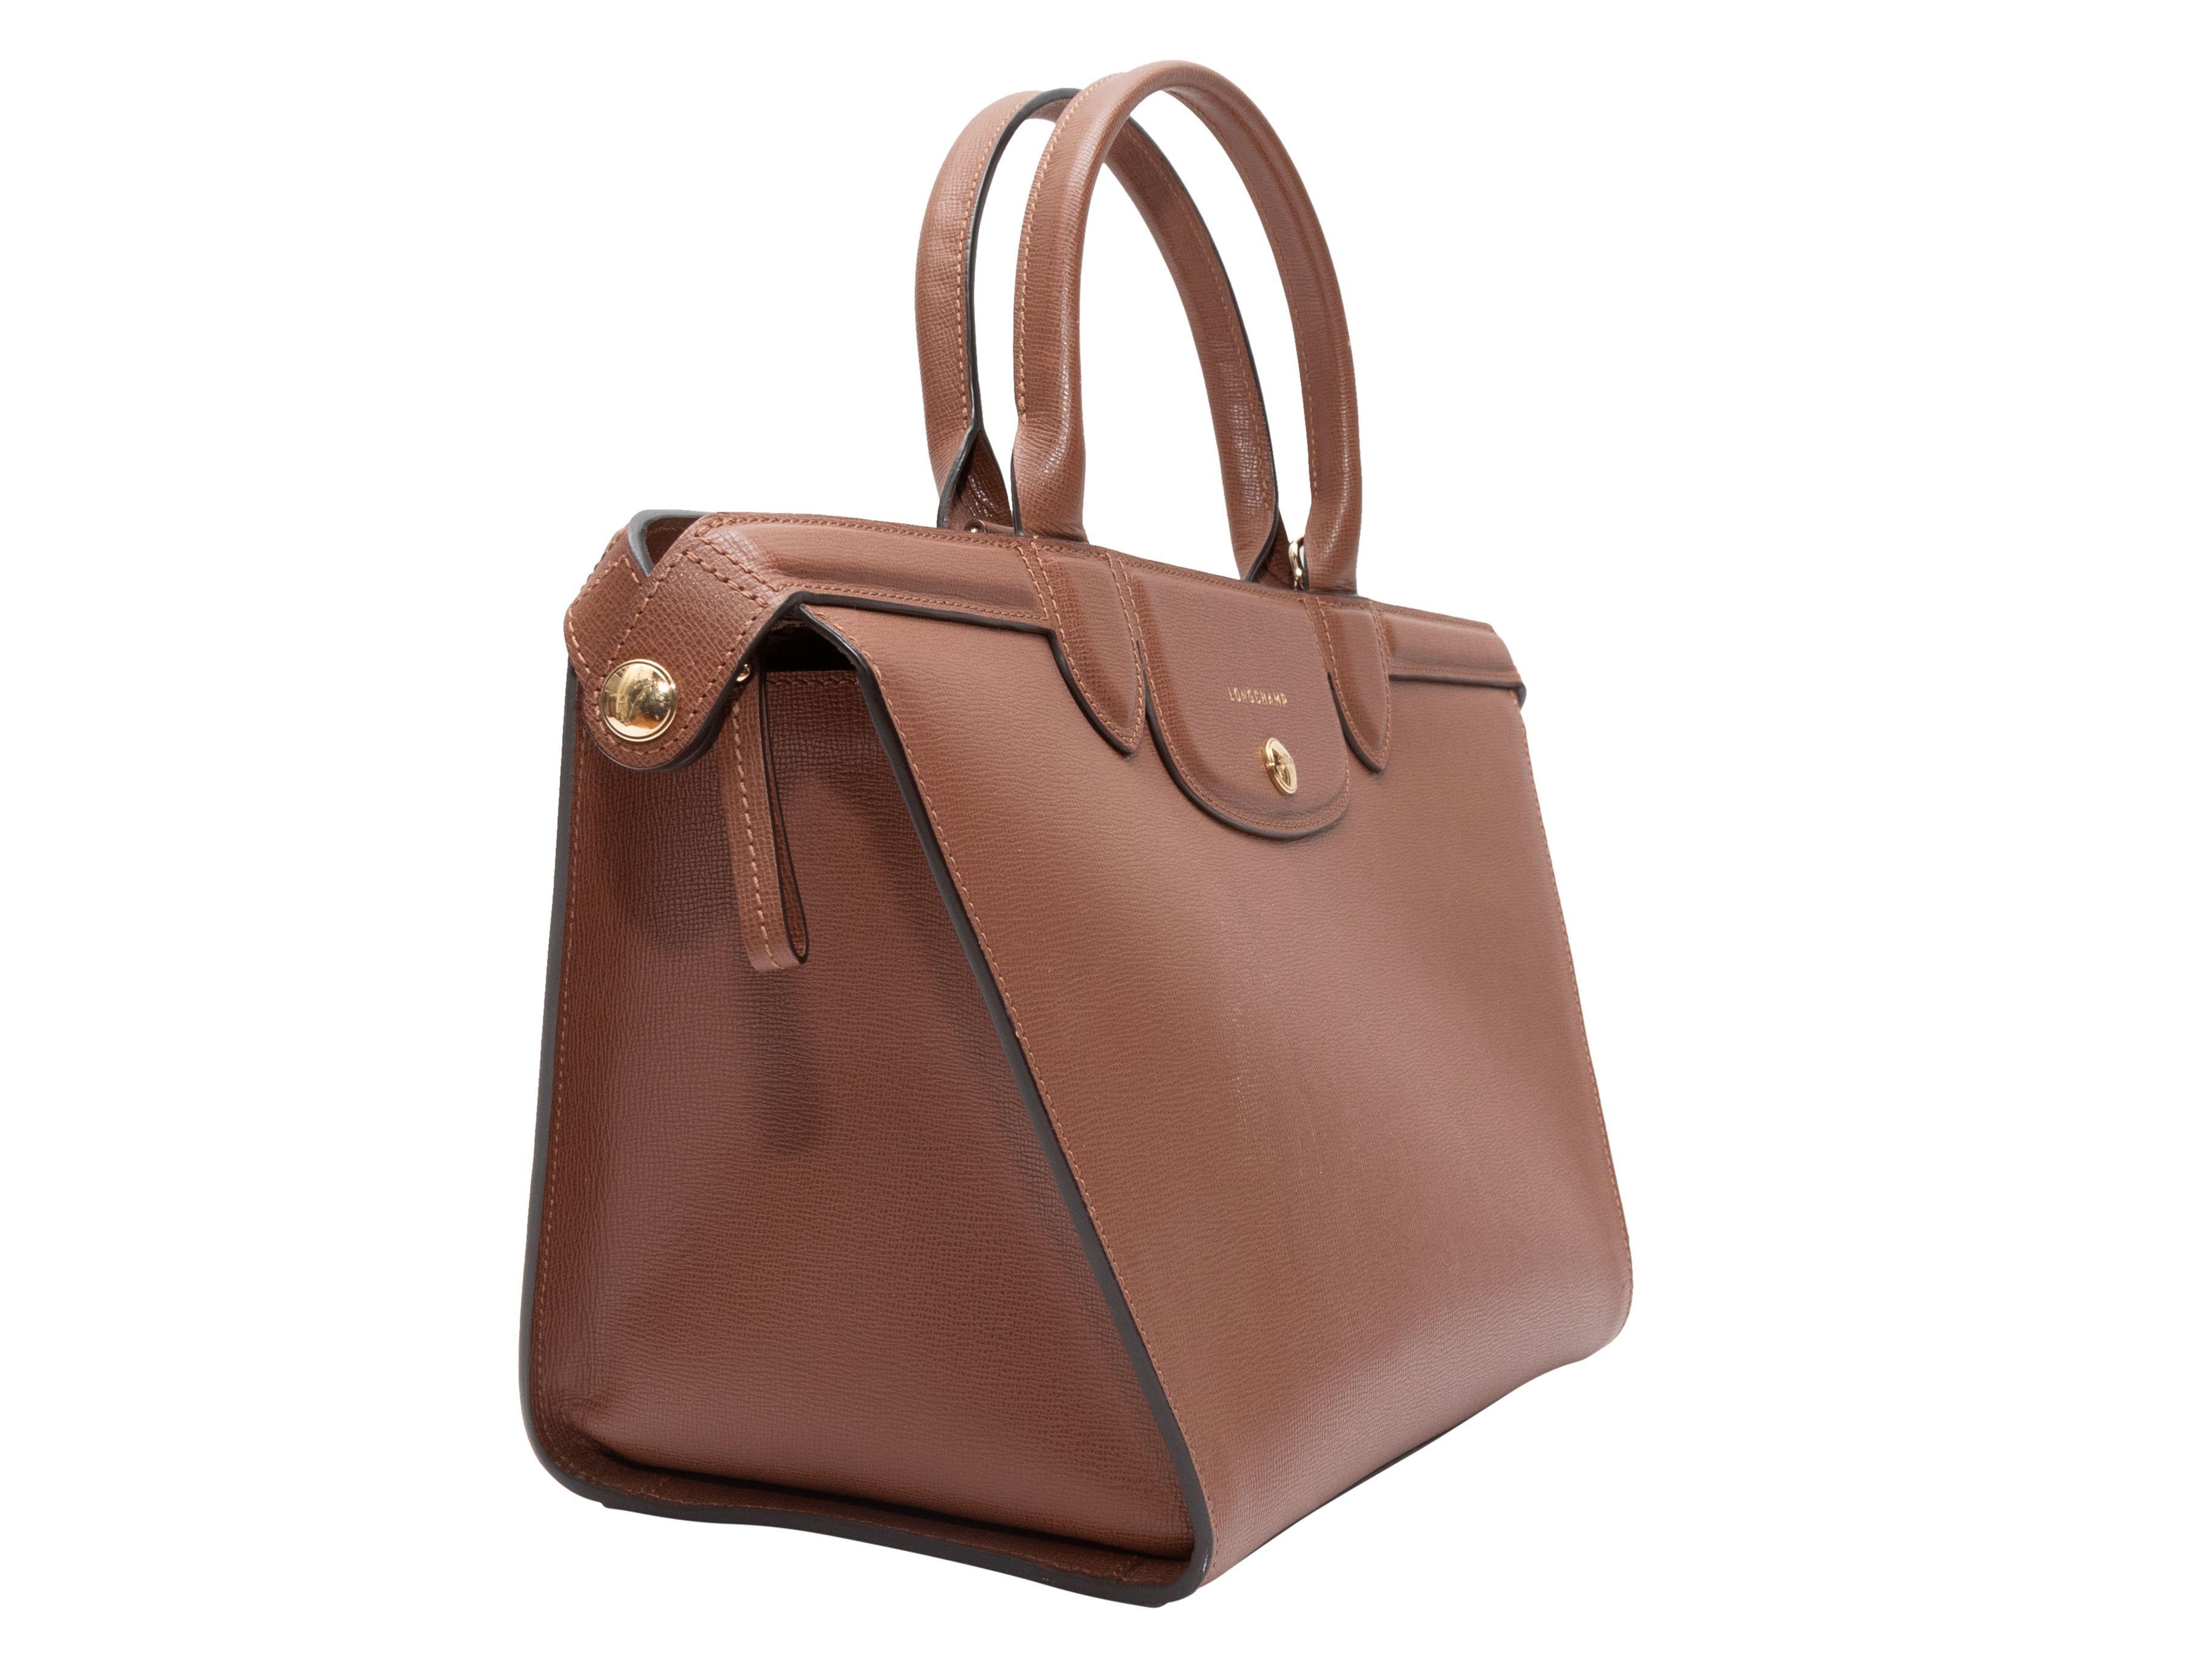 Longchamp Brown Leather Tote Bag 1